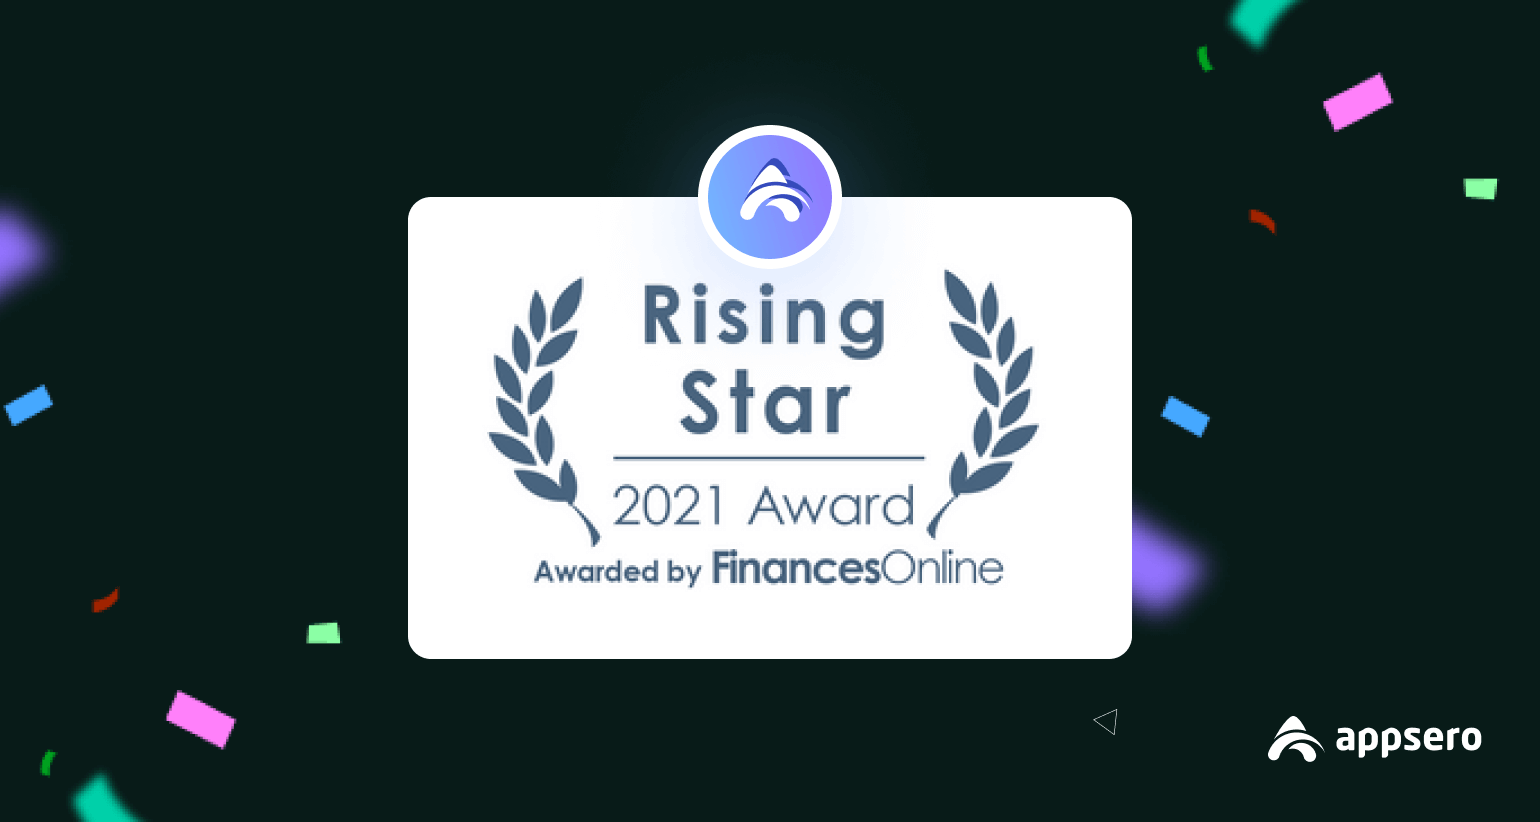 Rising Star Award 20201 Appsero Receives from FinanceOnline